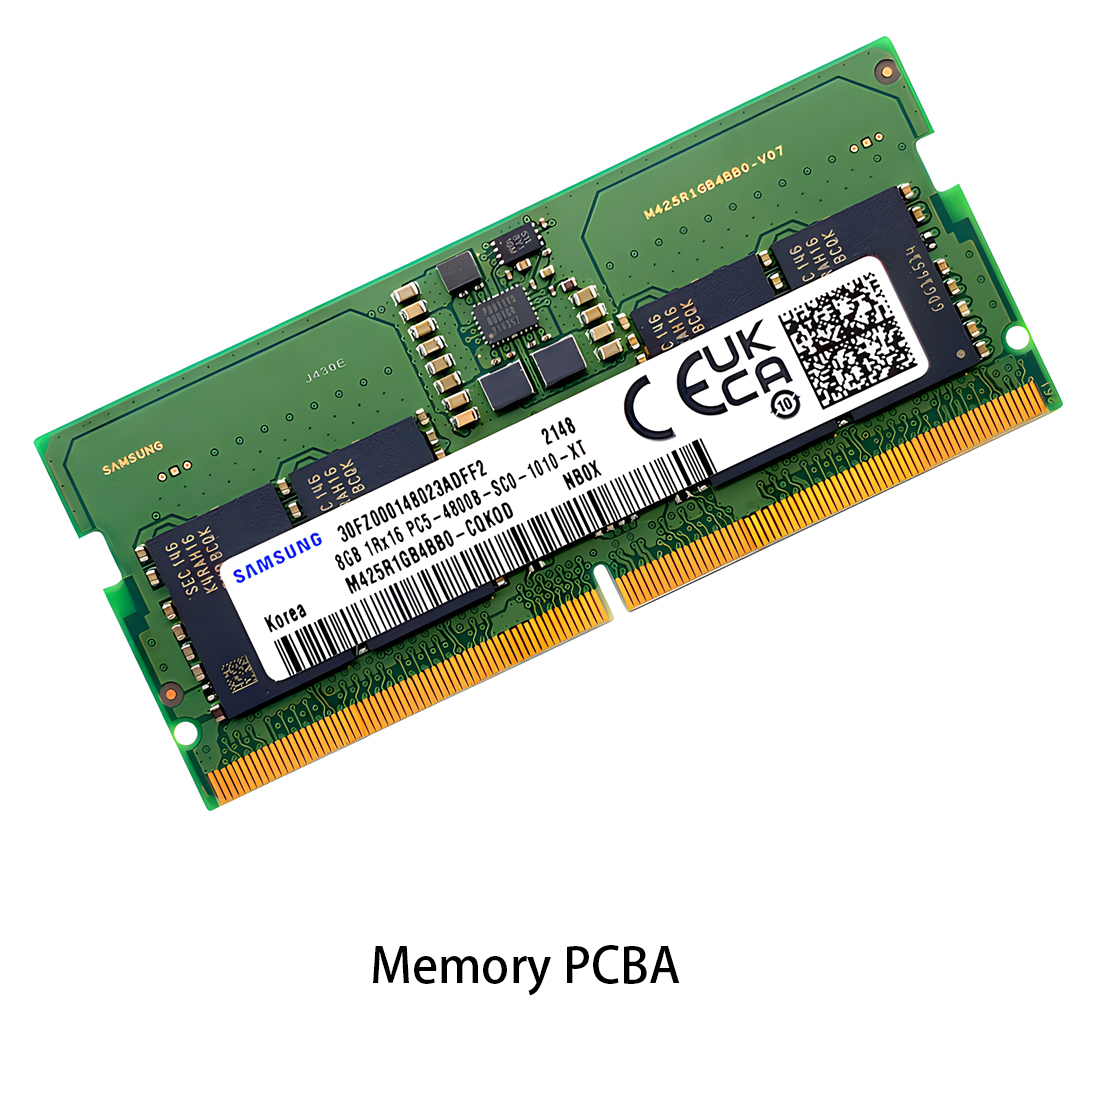 Memory PCBA